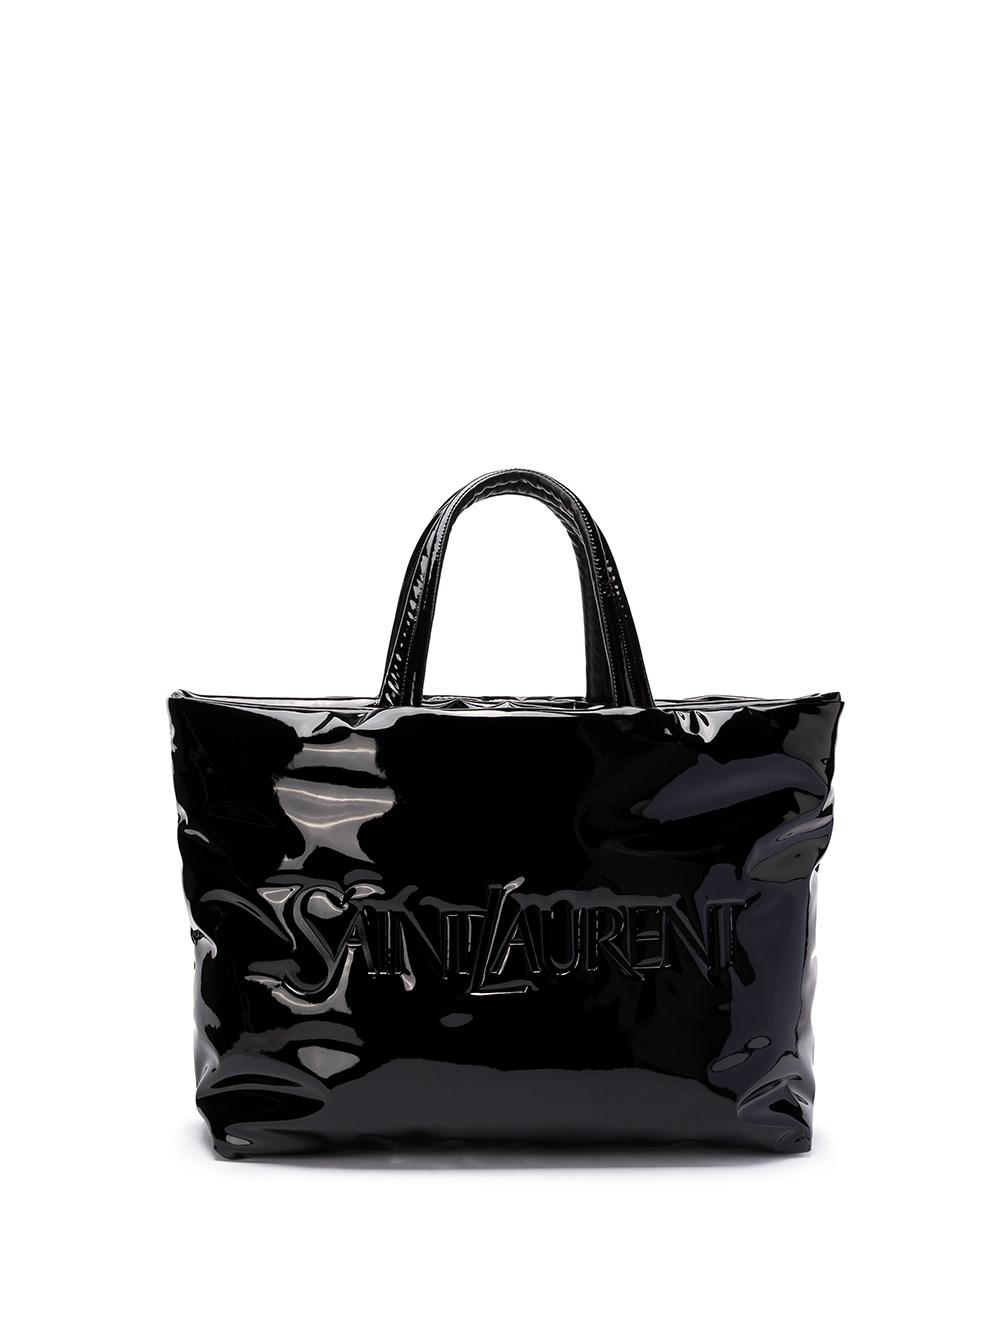 Pre-Owned Saint Laurent Handbags for Sale | Luxury Bags